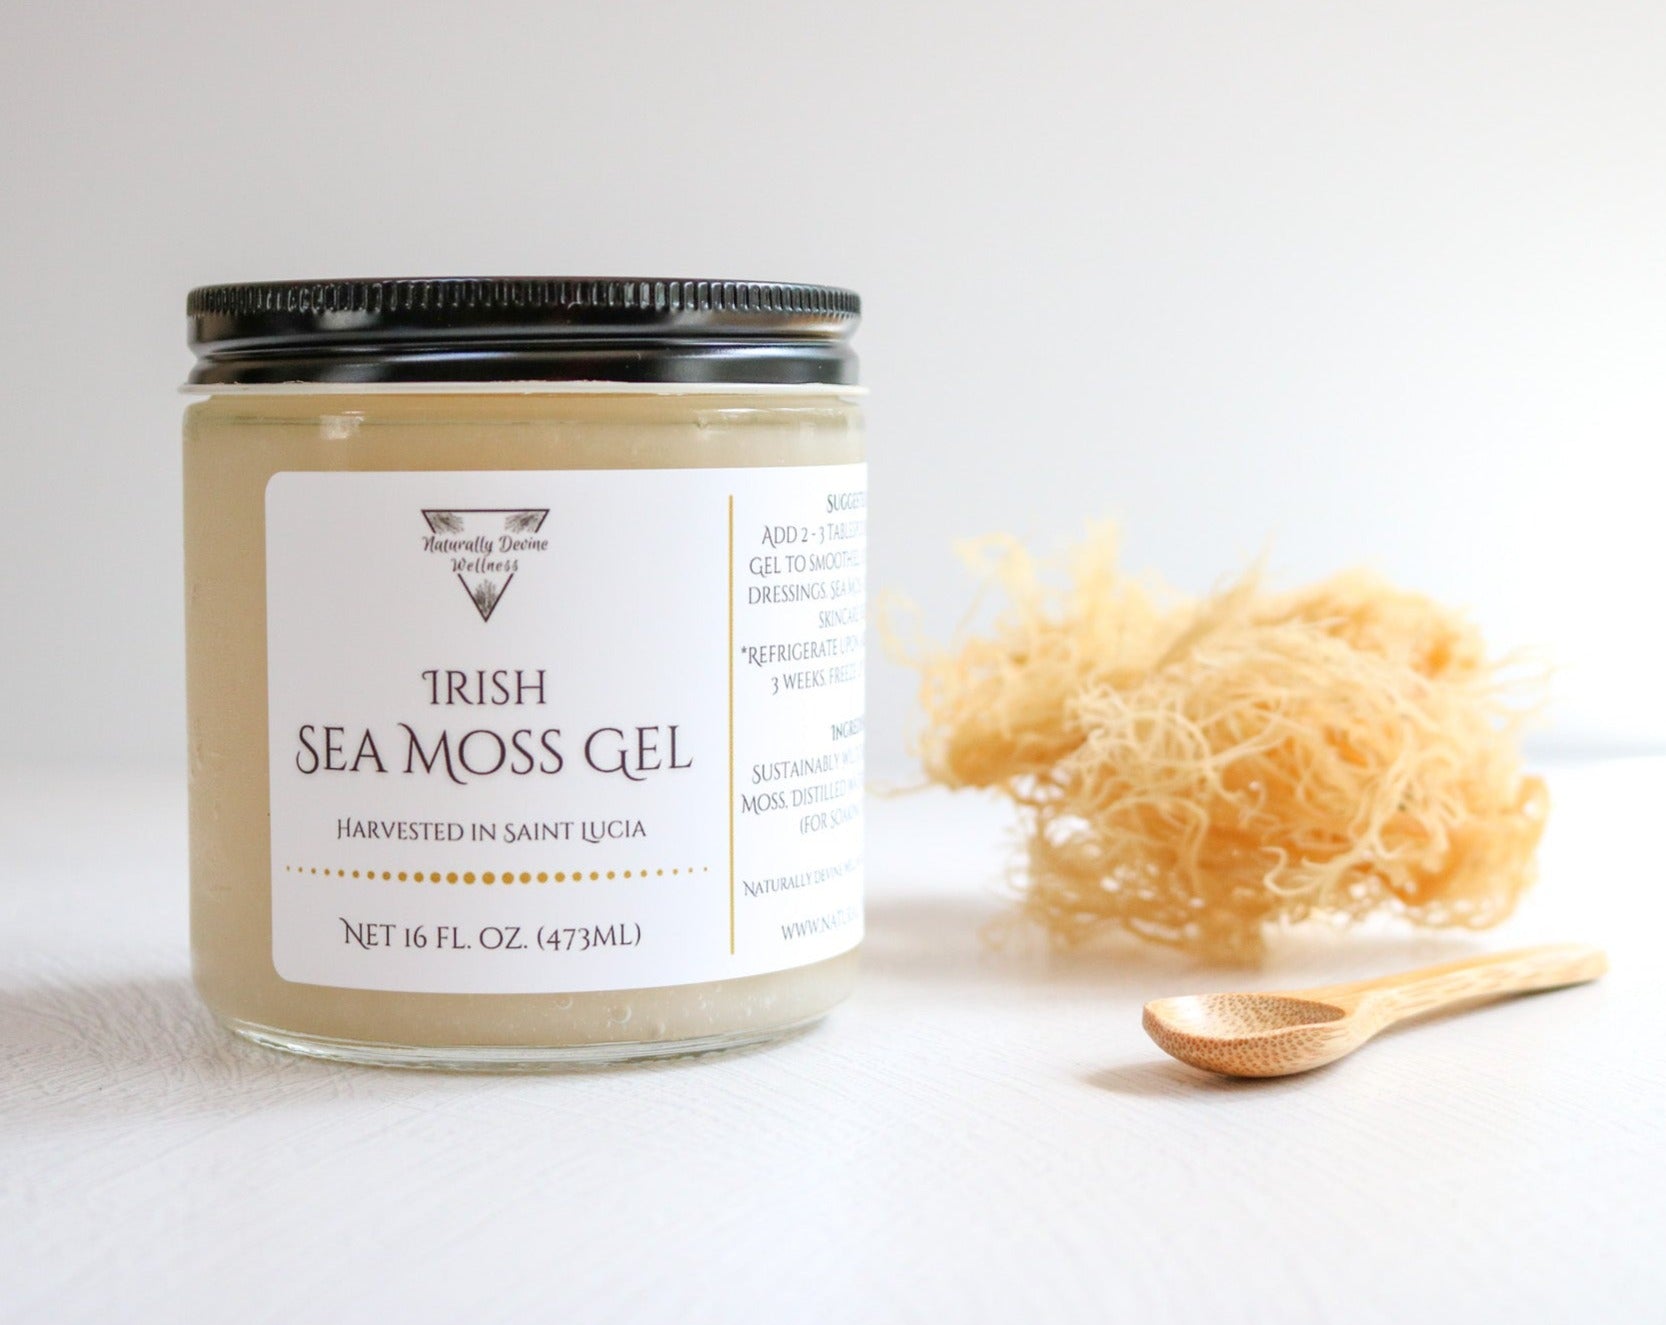 Irish Sea Moss Gel - Naturally Devine Wellness Glen Allen, VA